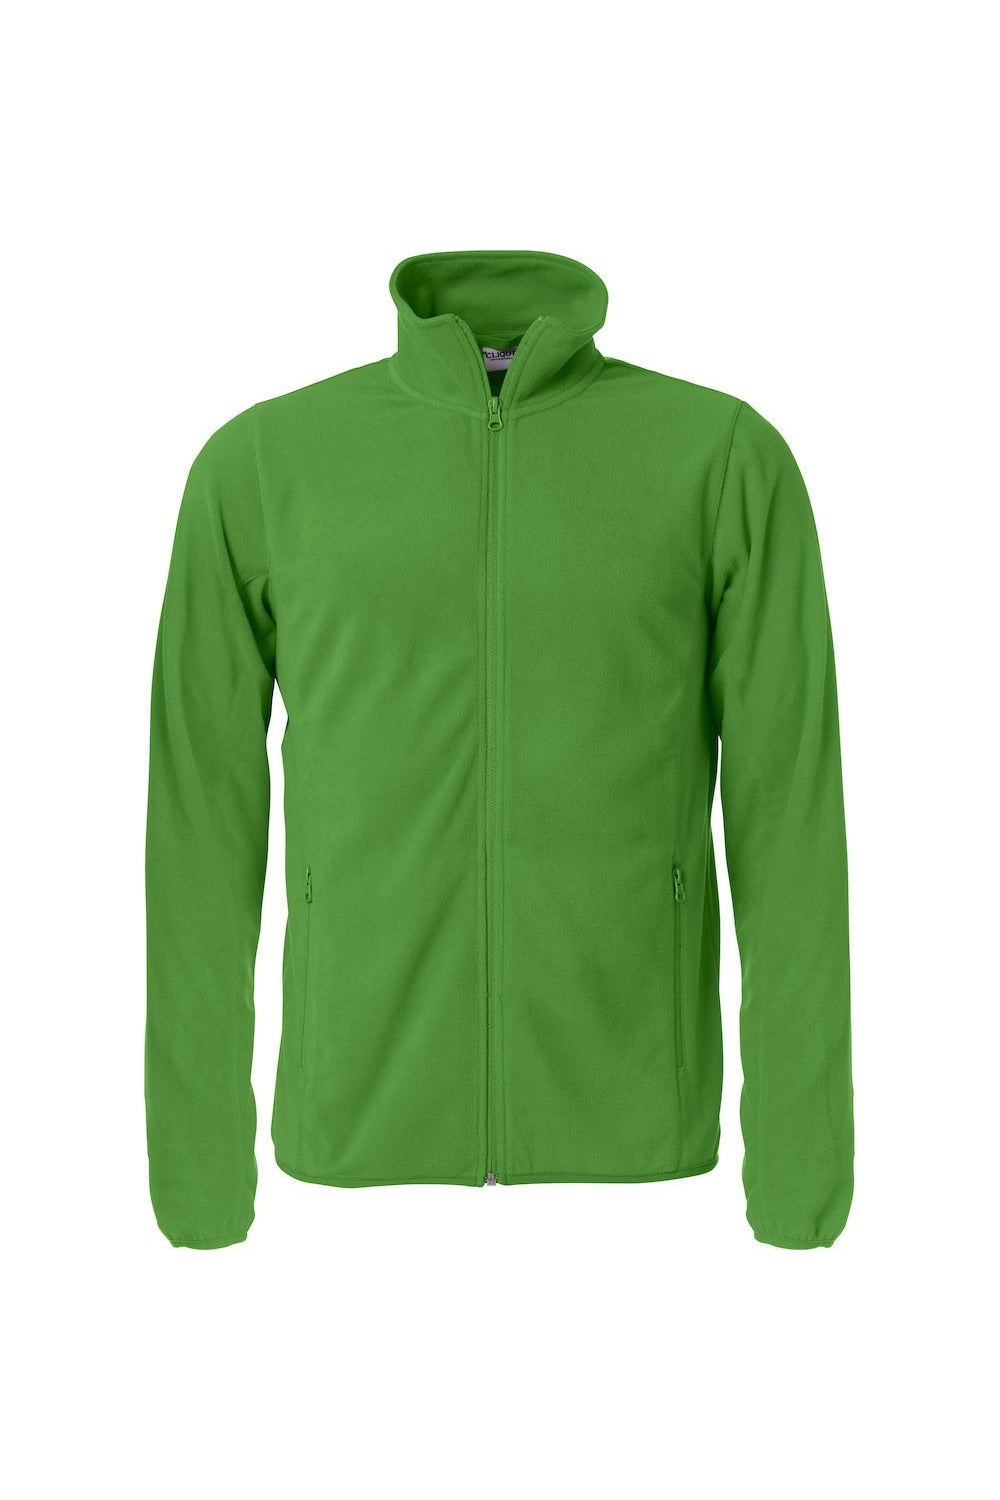 Mens Basic Microfleece Fleece Jacket - Apple Green